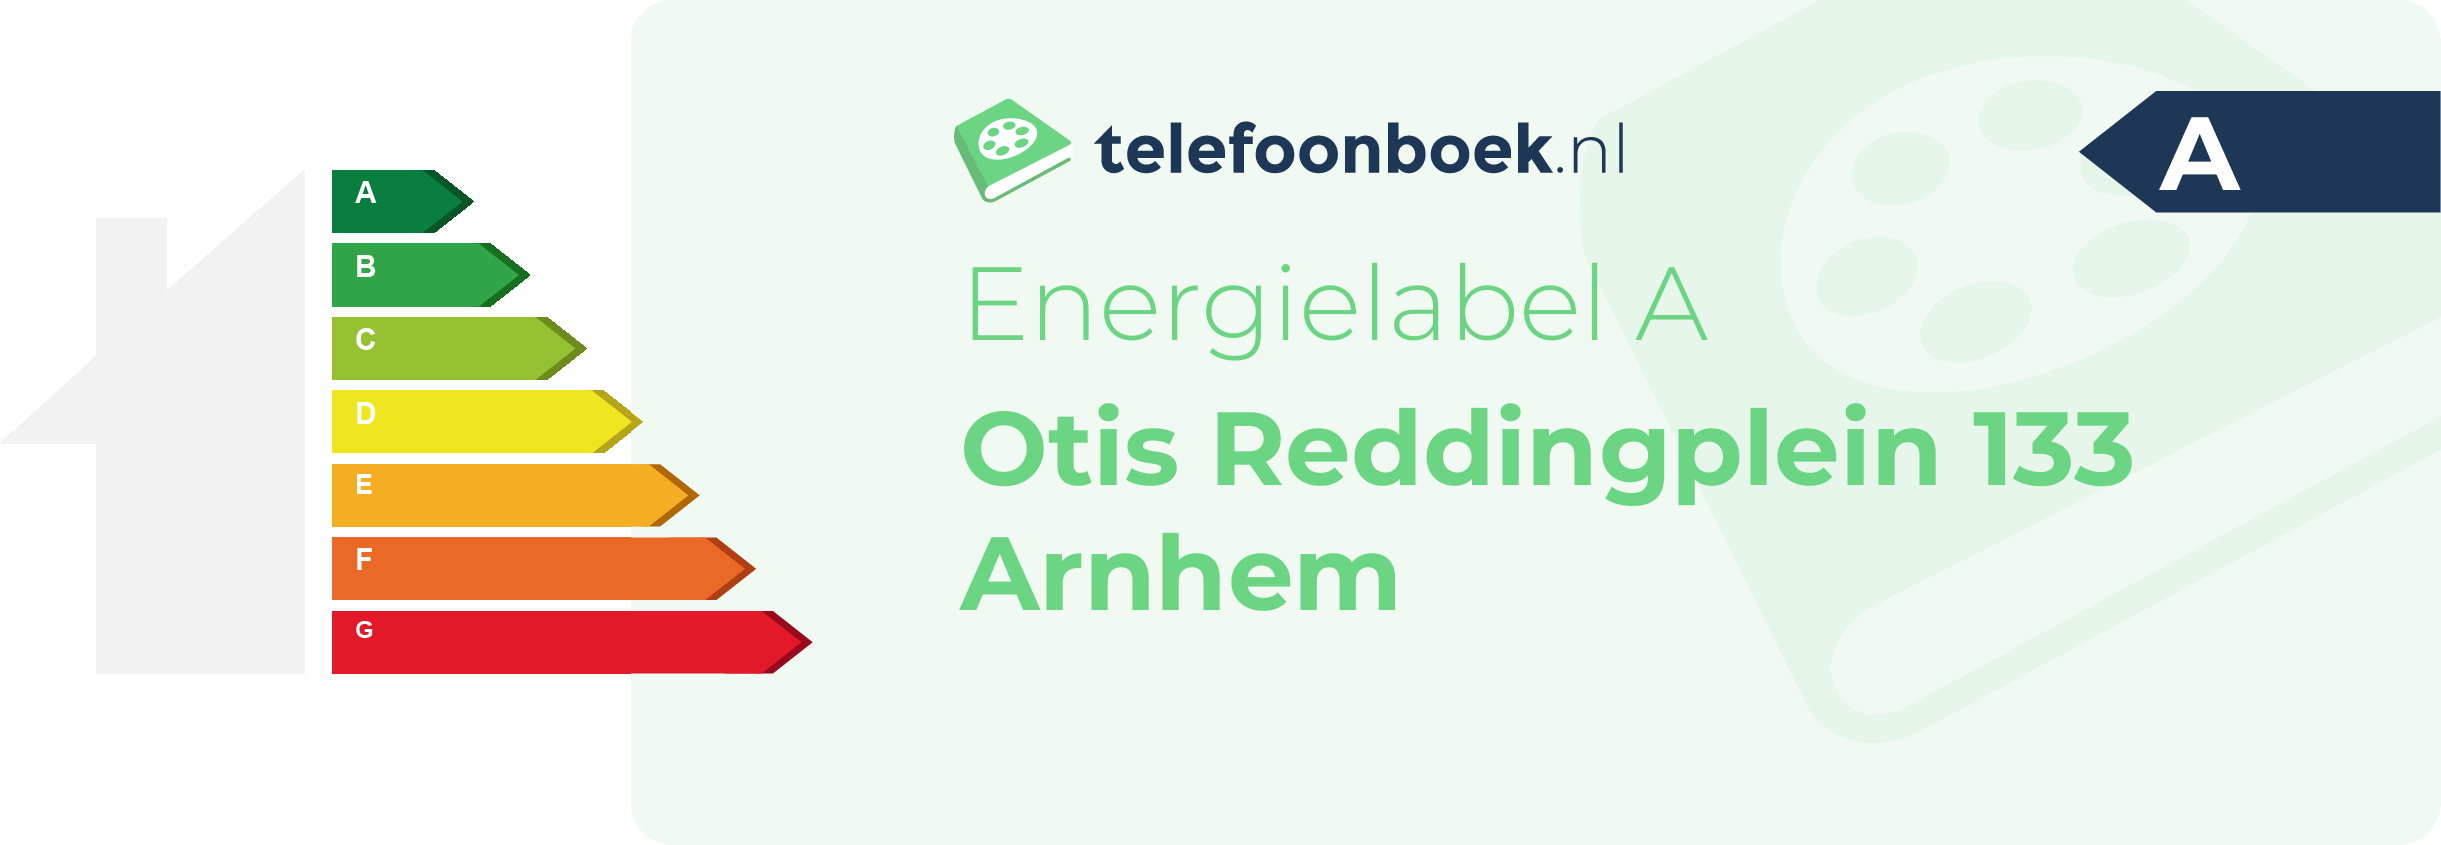 Energielabel Otis Reddingplein 133 Arnhem